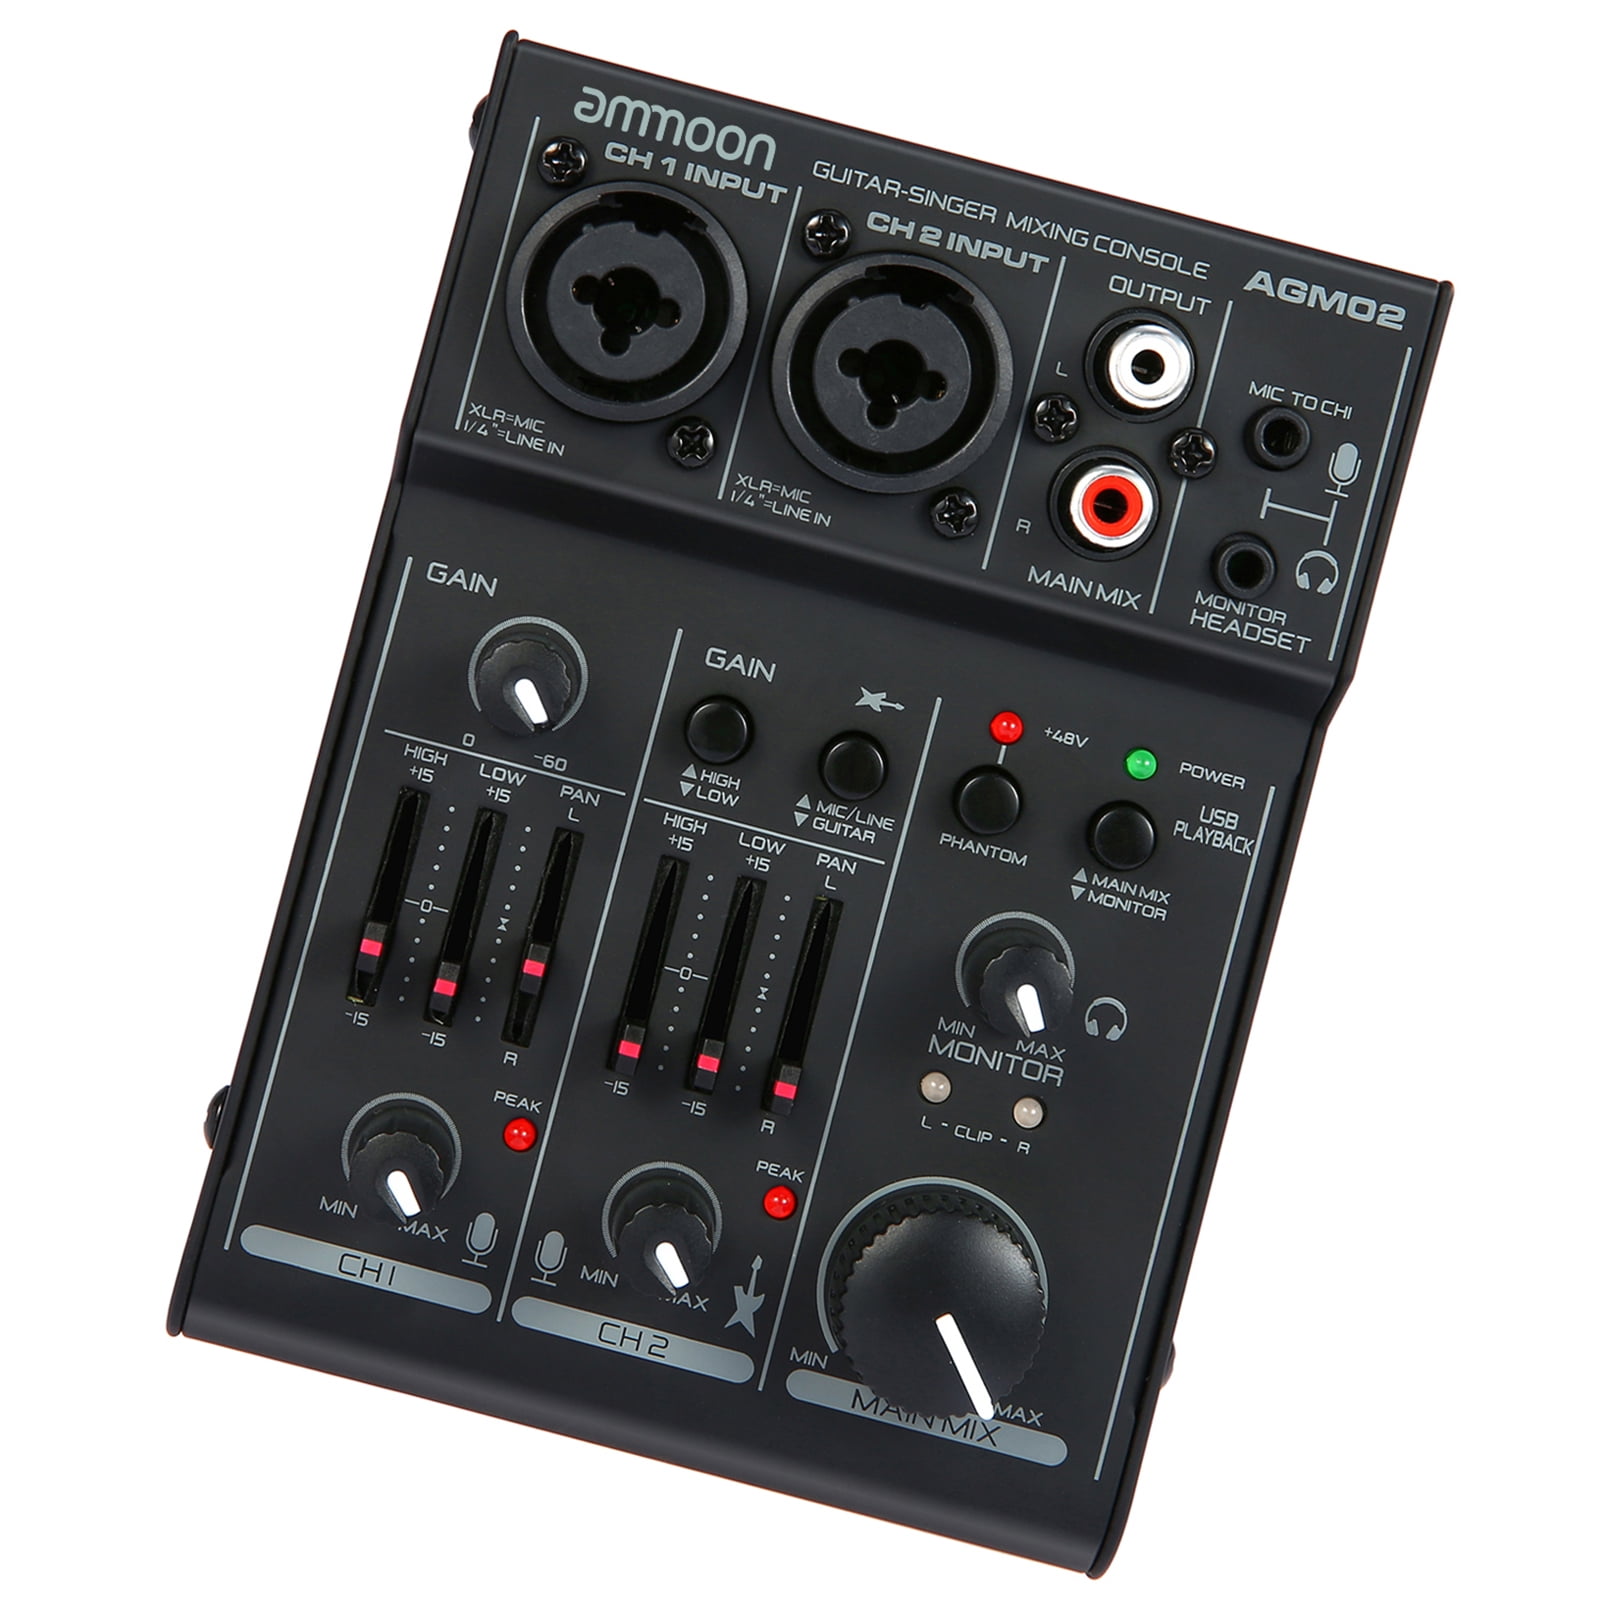 AGM02 Mini 2-Channel Sound Card Mixing Console Digital Audio Mixer 2-band EQ Built-in 48V Phantom 5V USB for Home Studio Recording DJ Network Live Broadcast Karaoke -